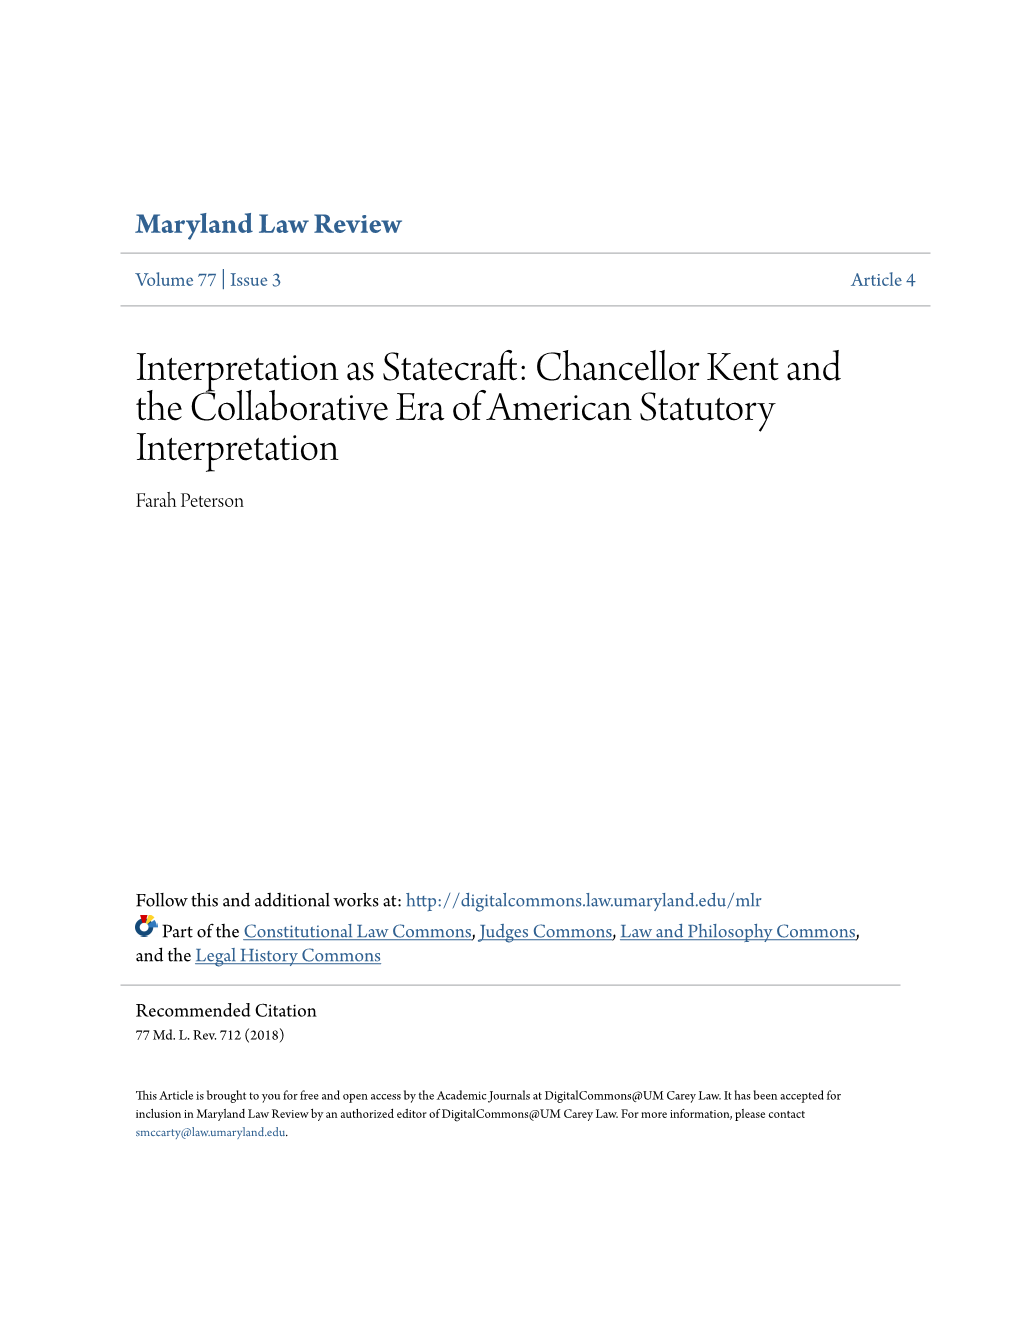 Chancellor Kent and the Collaborative Era of American Statutory Interpretation Farah Peterson